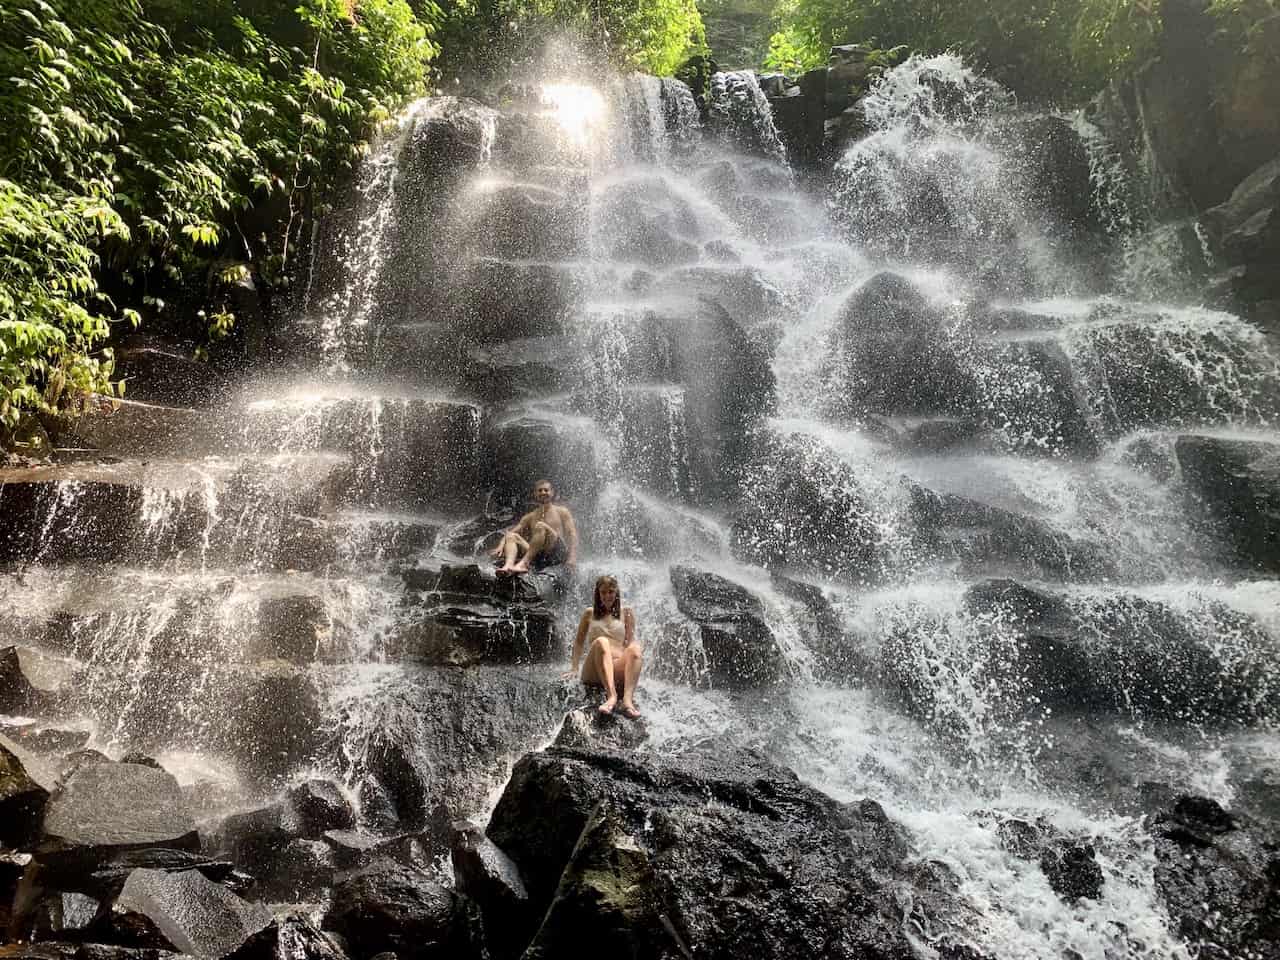 The Kanto Lampo Waterfall Near Ubud, Bali | Guide, Map, & Logistics